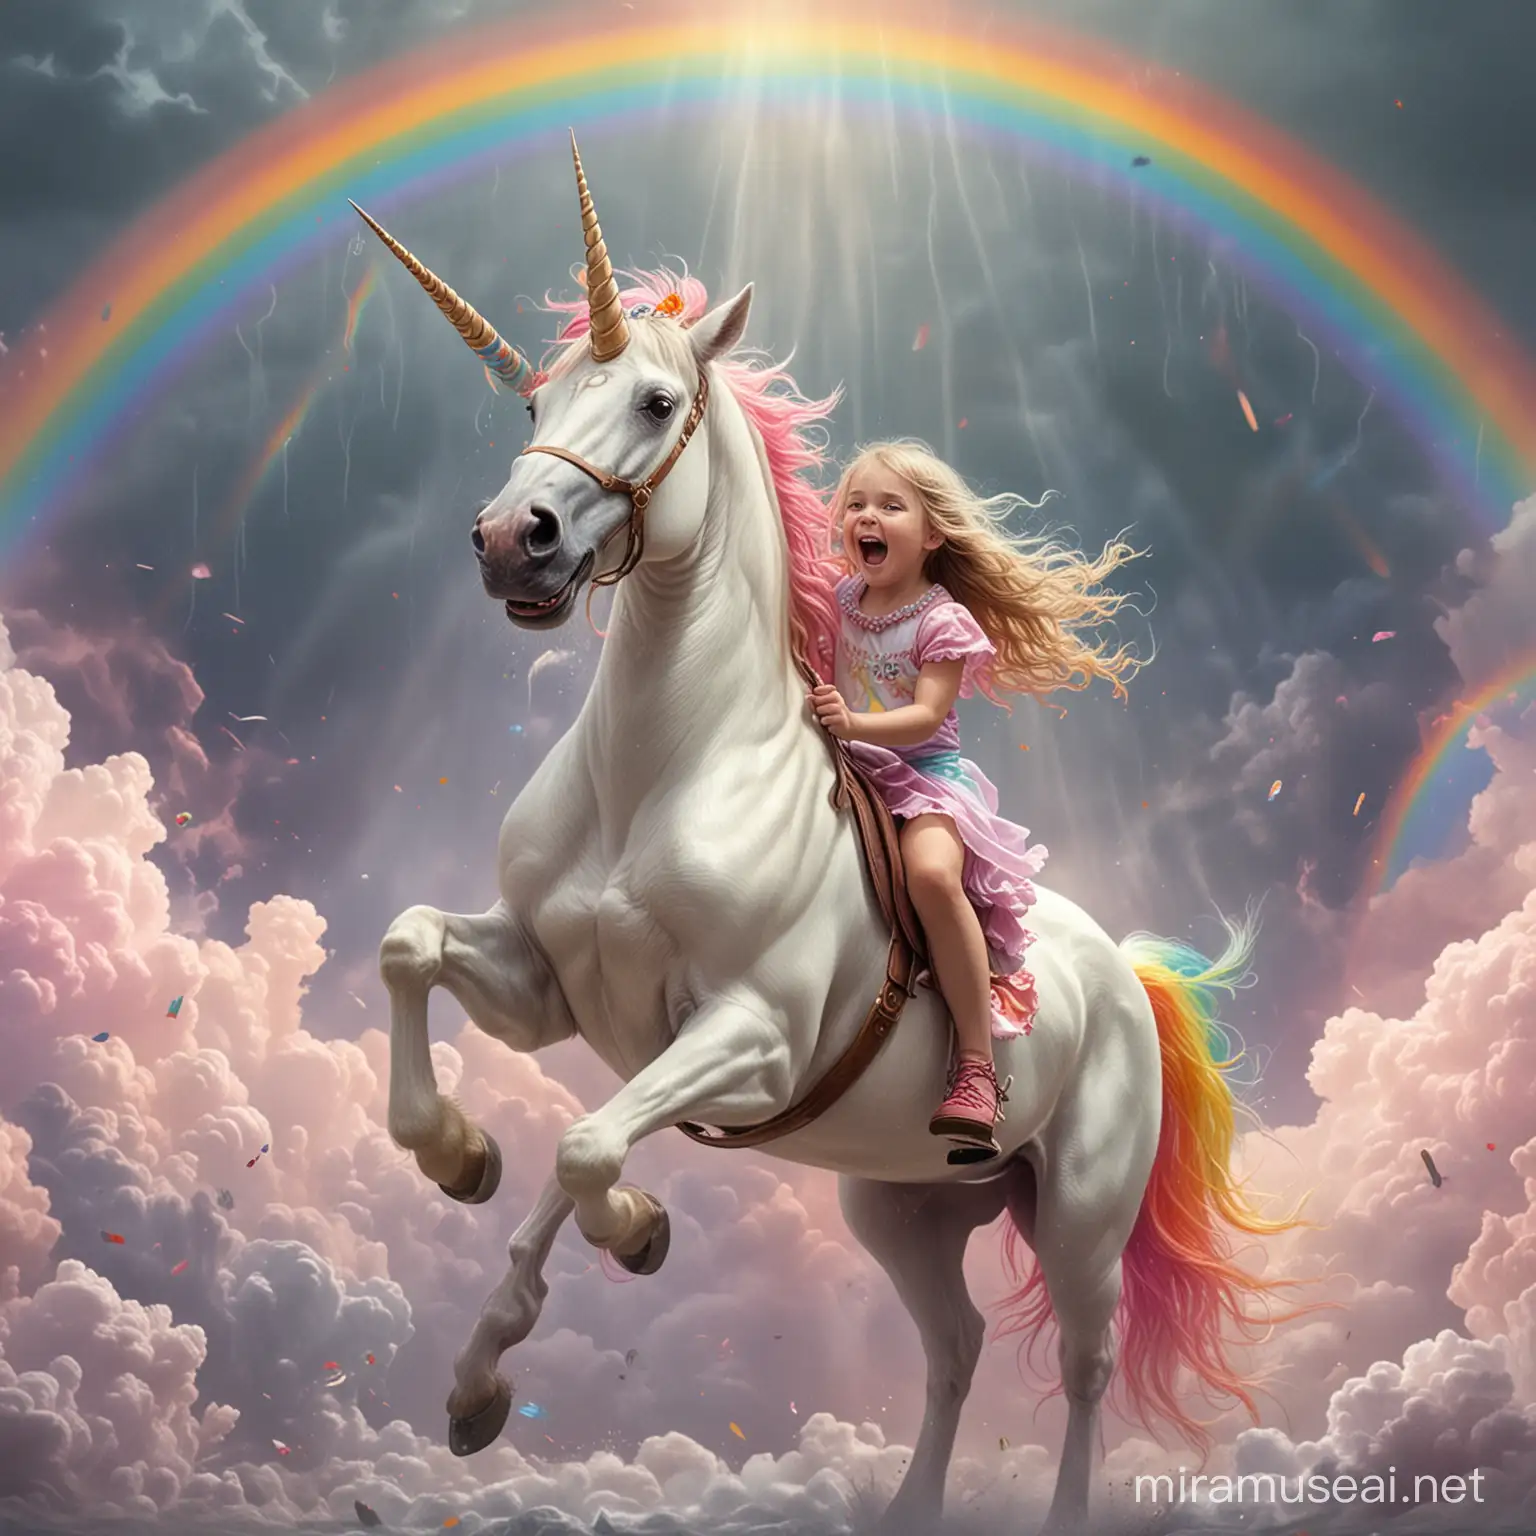 Eccentric Girl Riding Unicorn Through Vibrant Rainbow